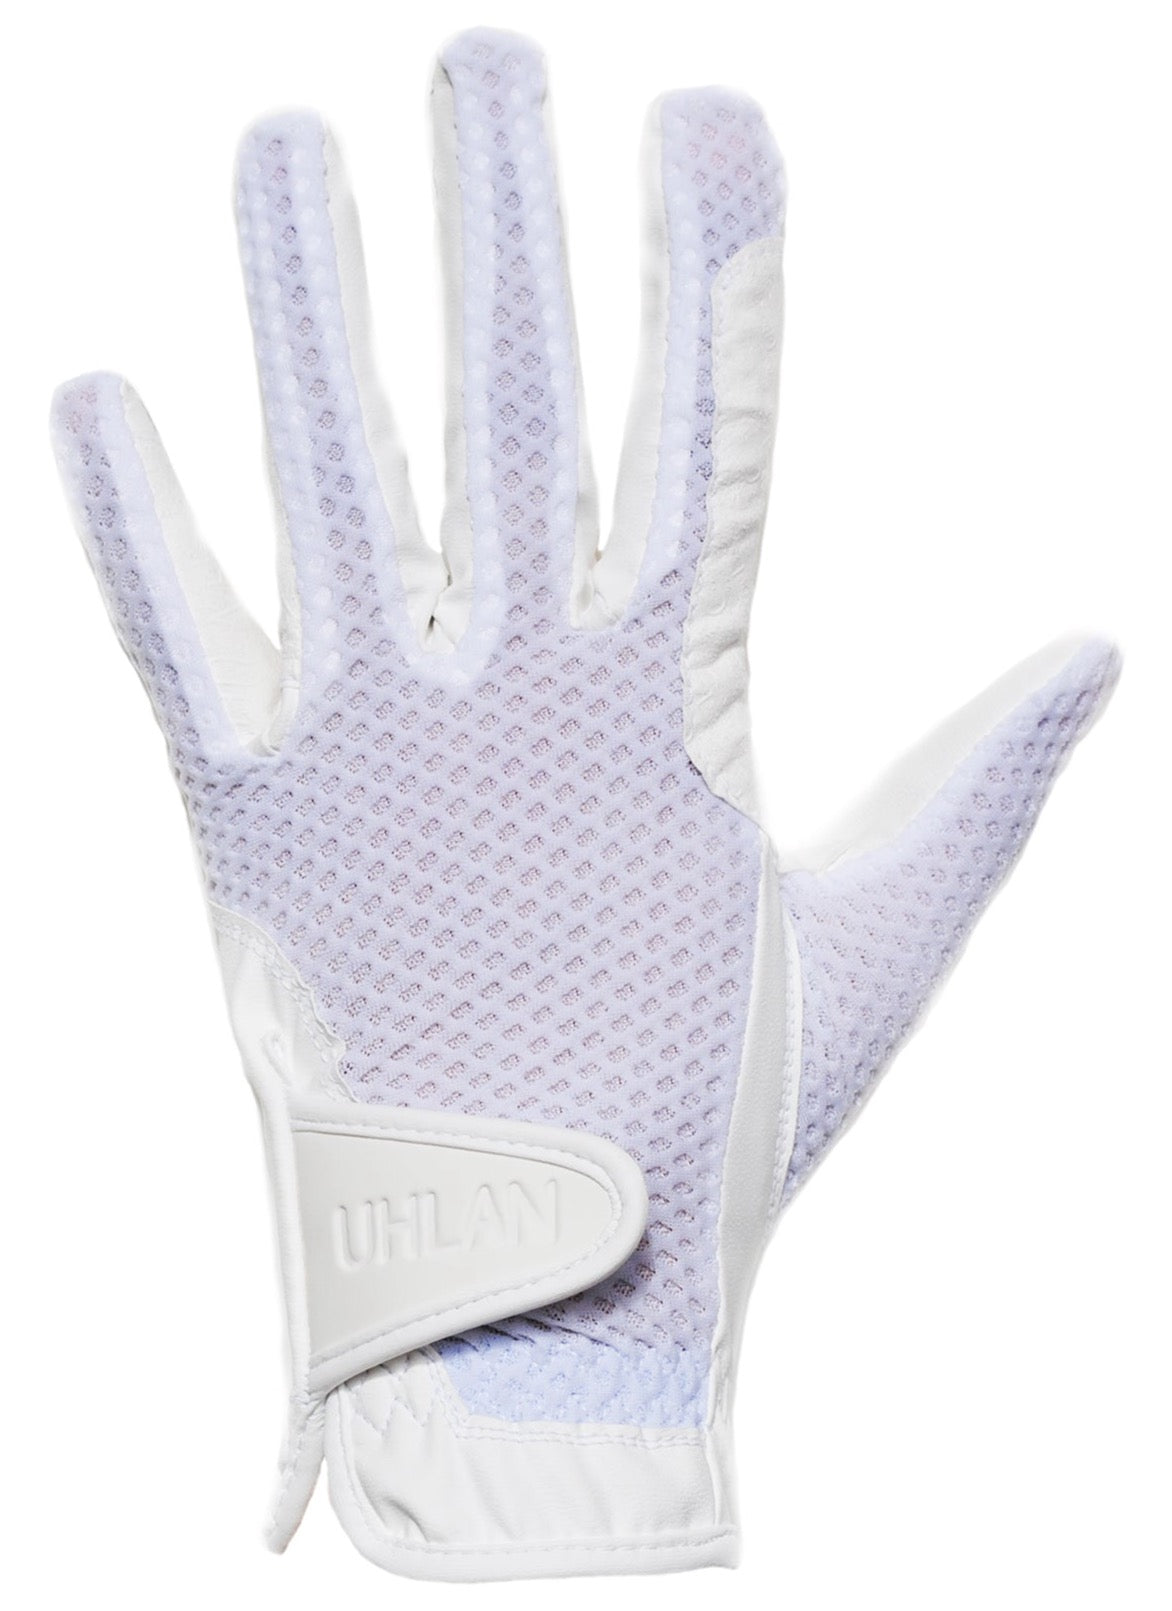 Unisex White Mesh Grip Riding Gloves